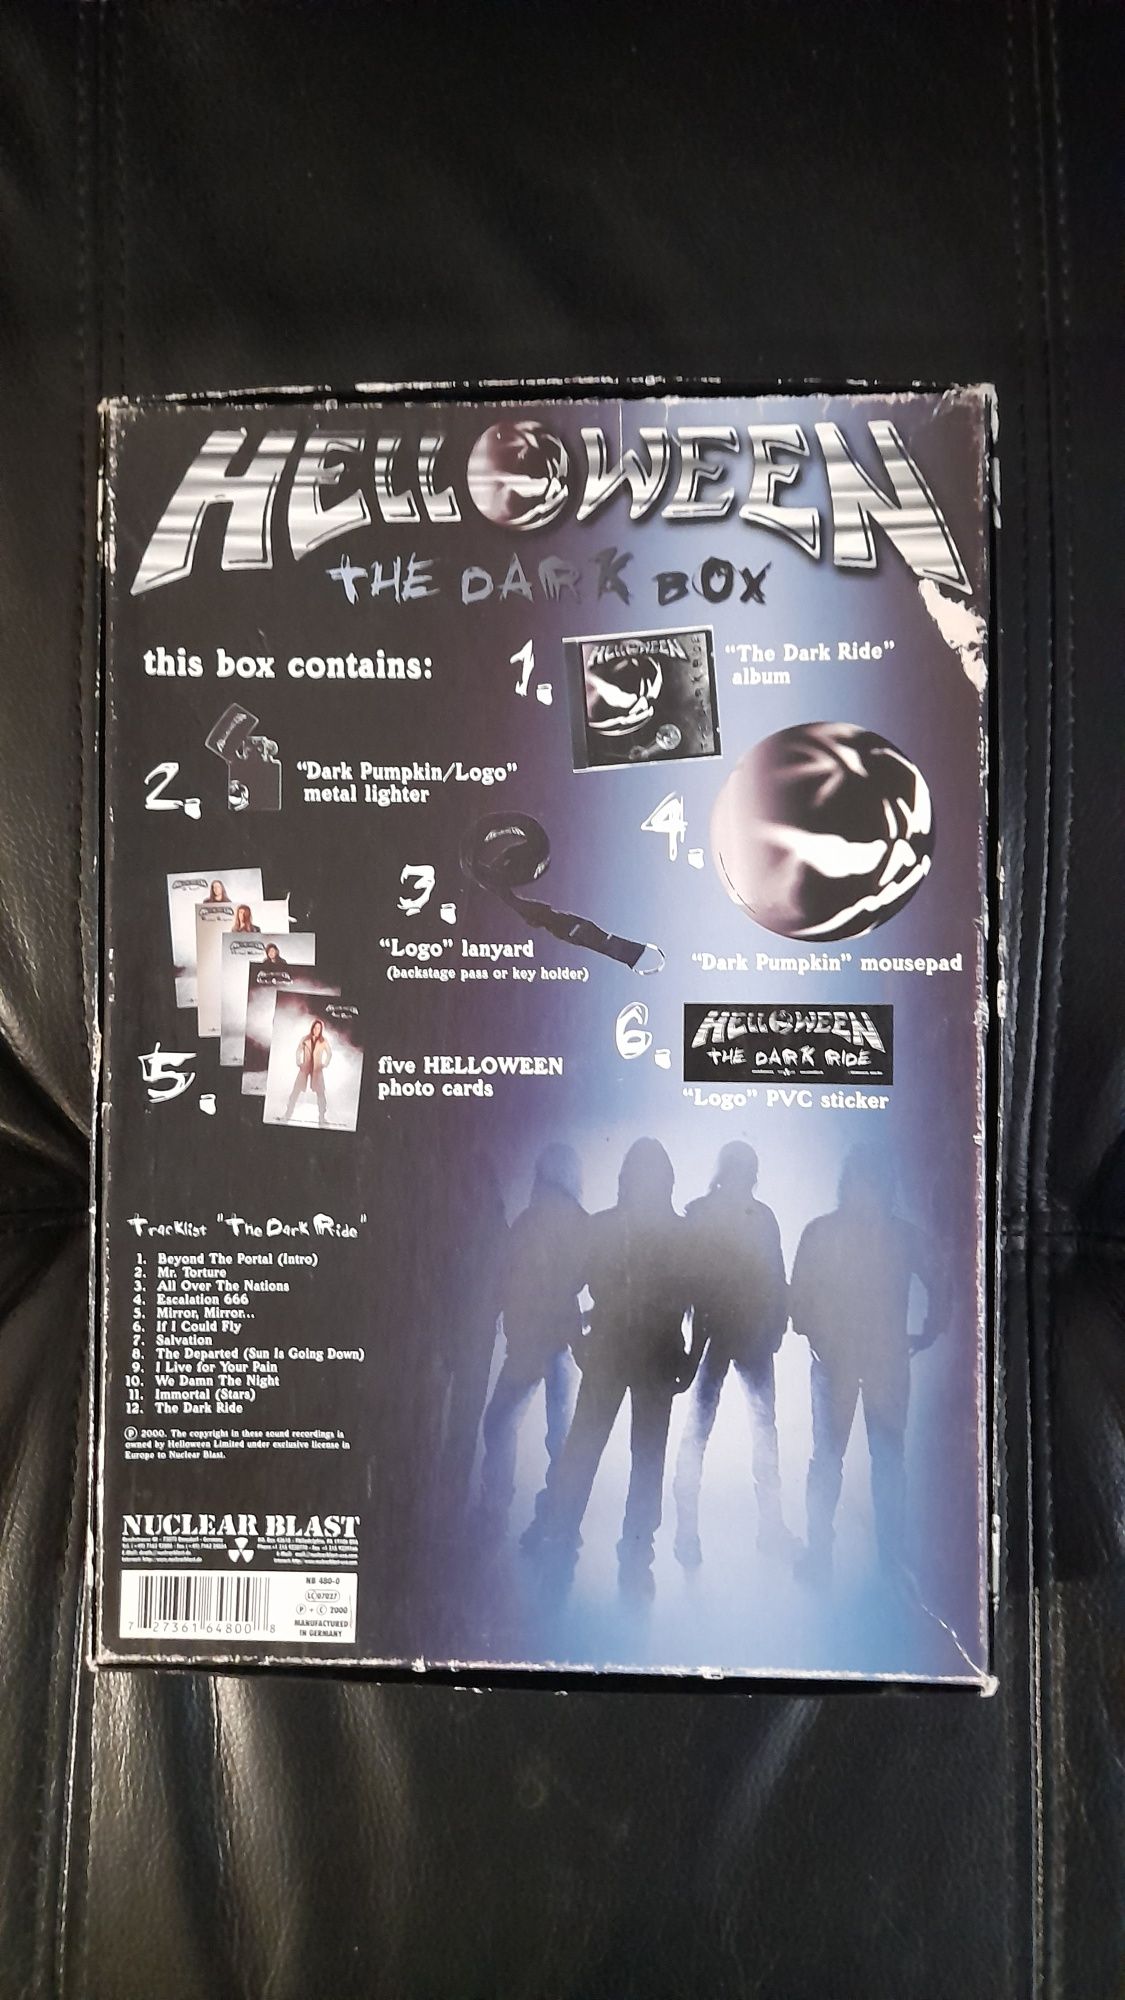 Cd Helloween The dark box